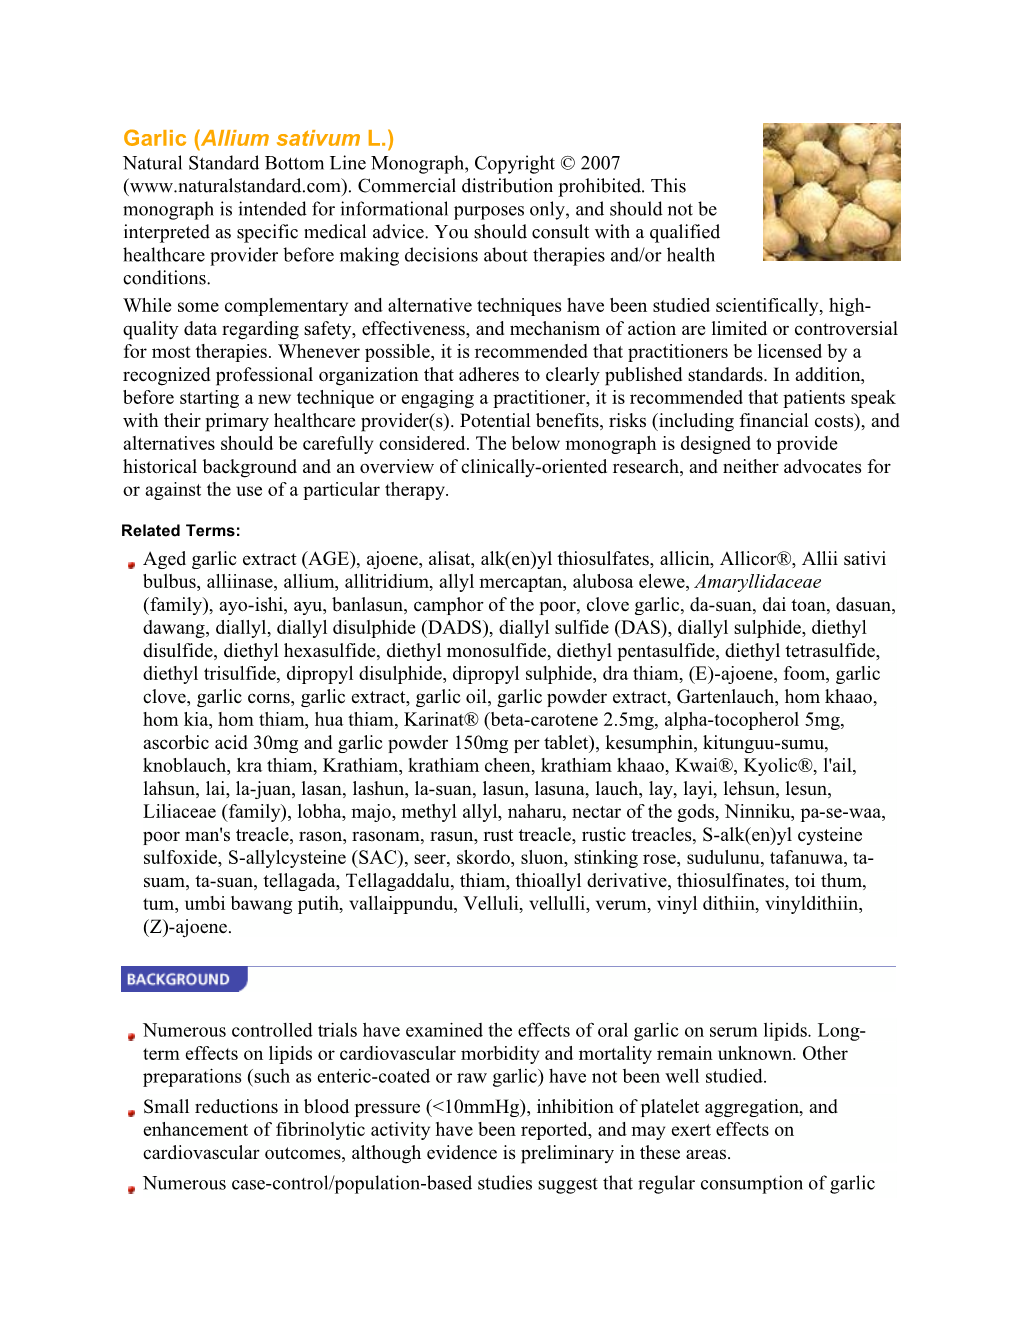 Garlic (Allium Sativum L.) Natural Standard Bottom Line Monograph, Copyright © 2007 (